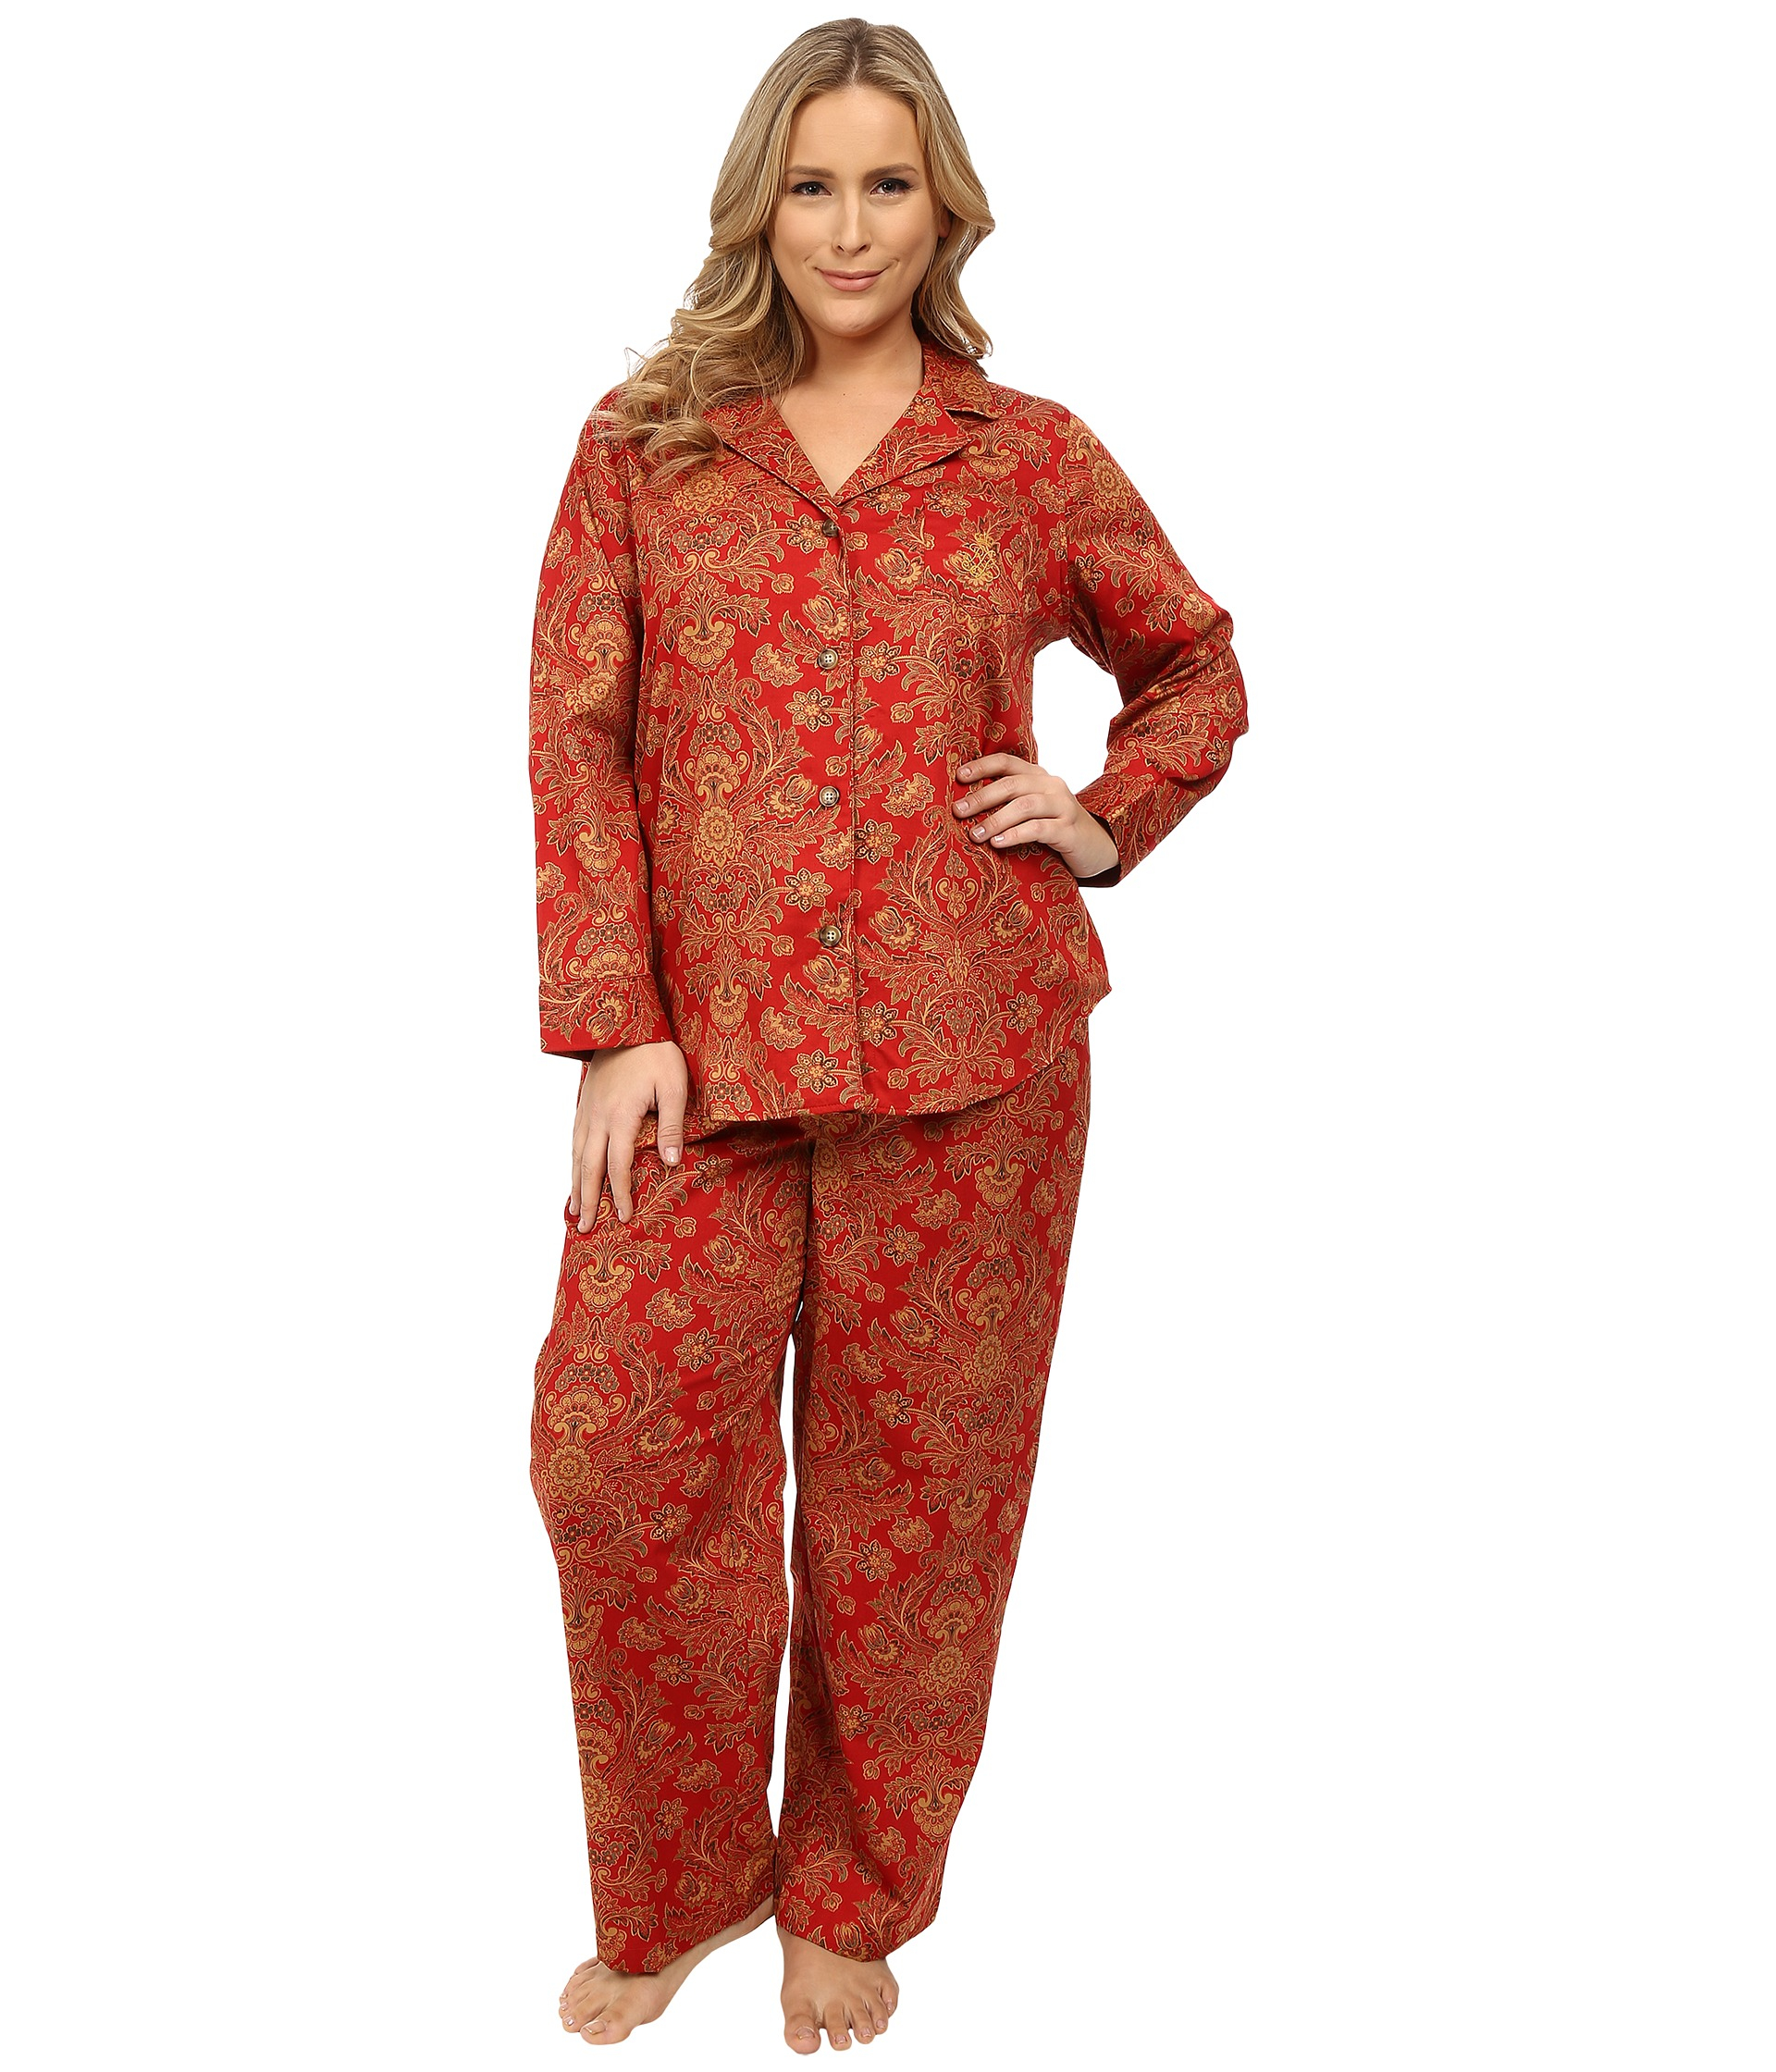 Lyst - Lauren by Ralph Lauren Classic Paisley Sateen Packaged Pajamas ...